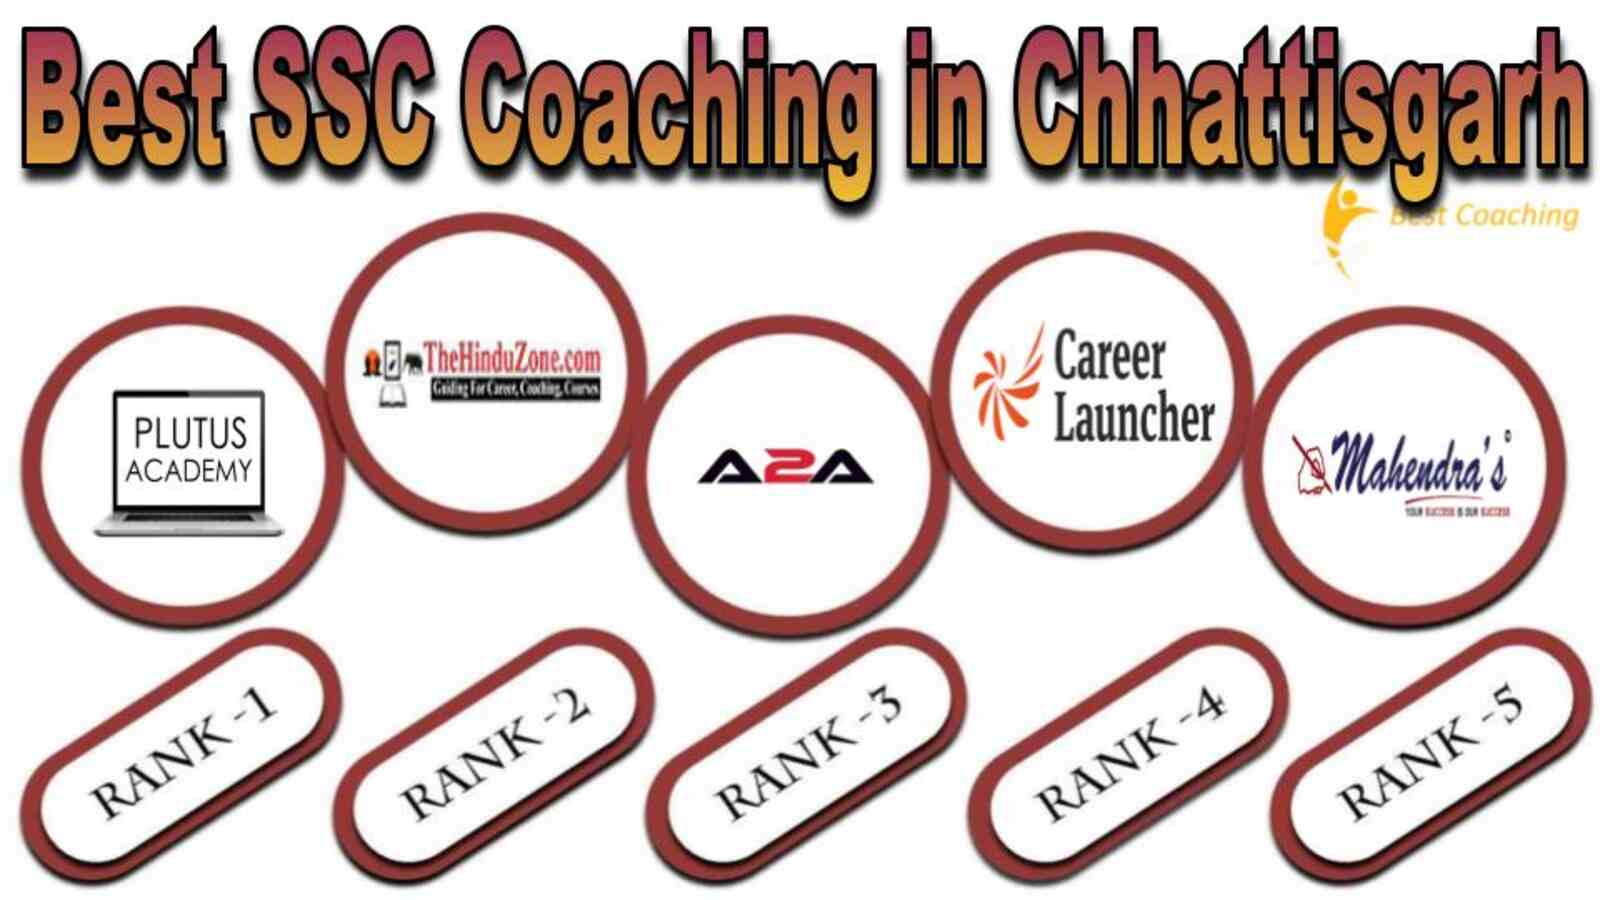 Best SSC coaching in Chhattisgarh